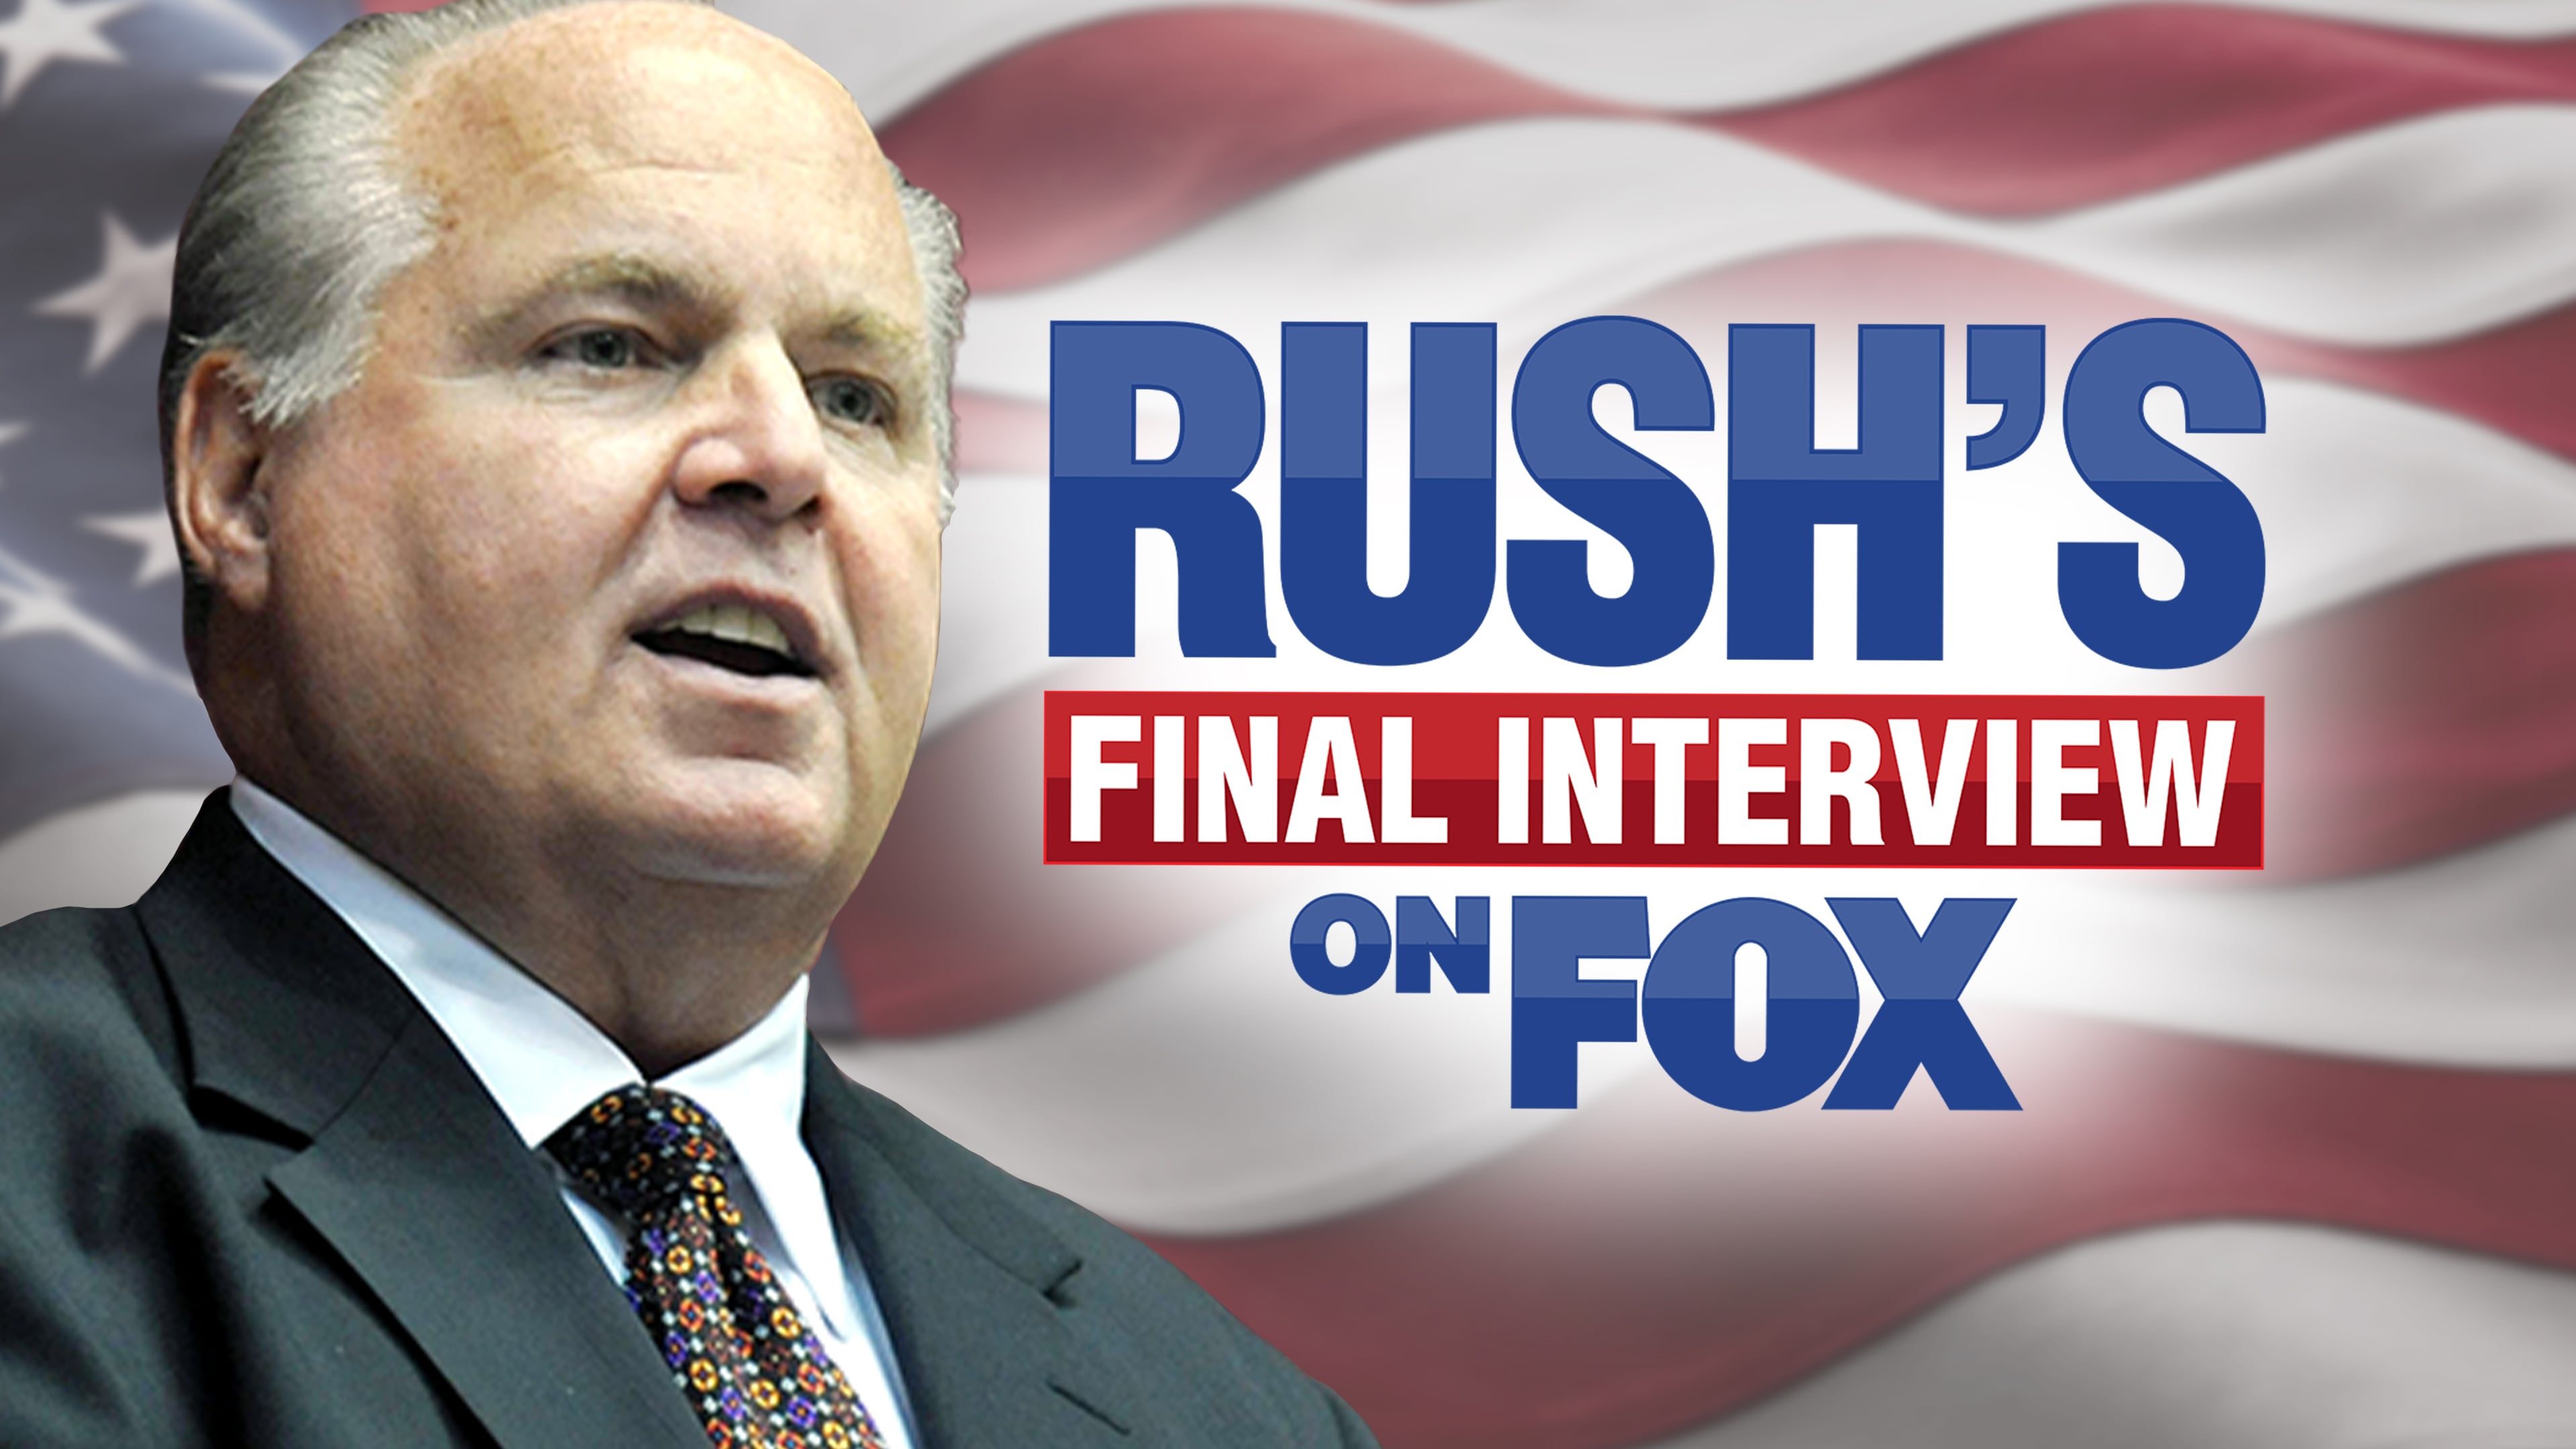 Rush's Final Interview on Fox